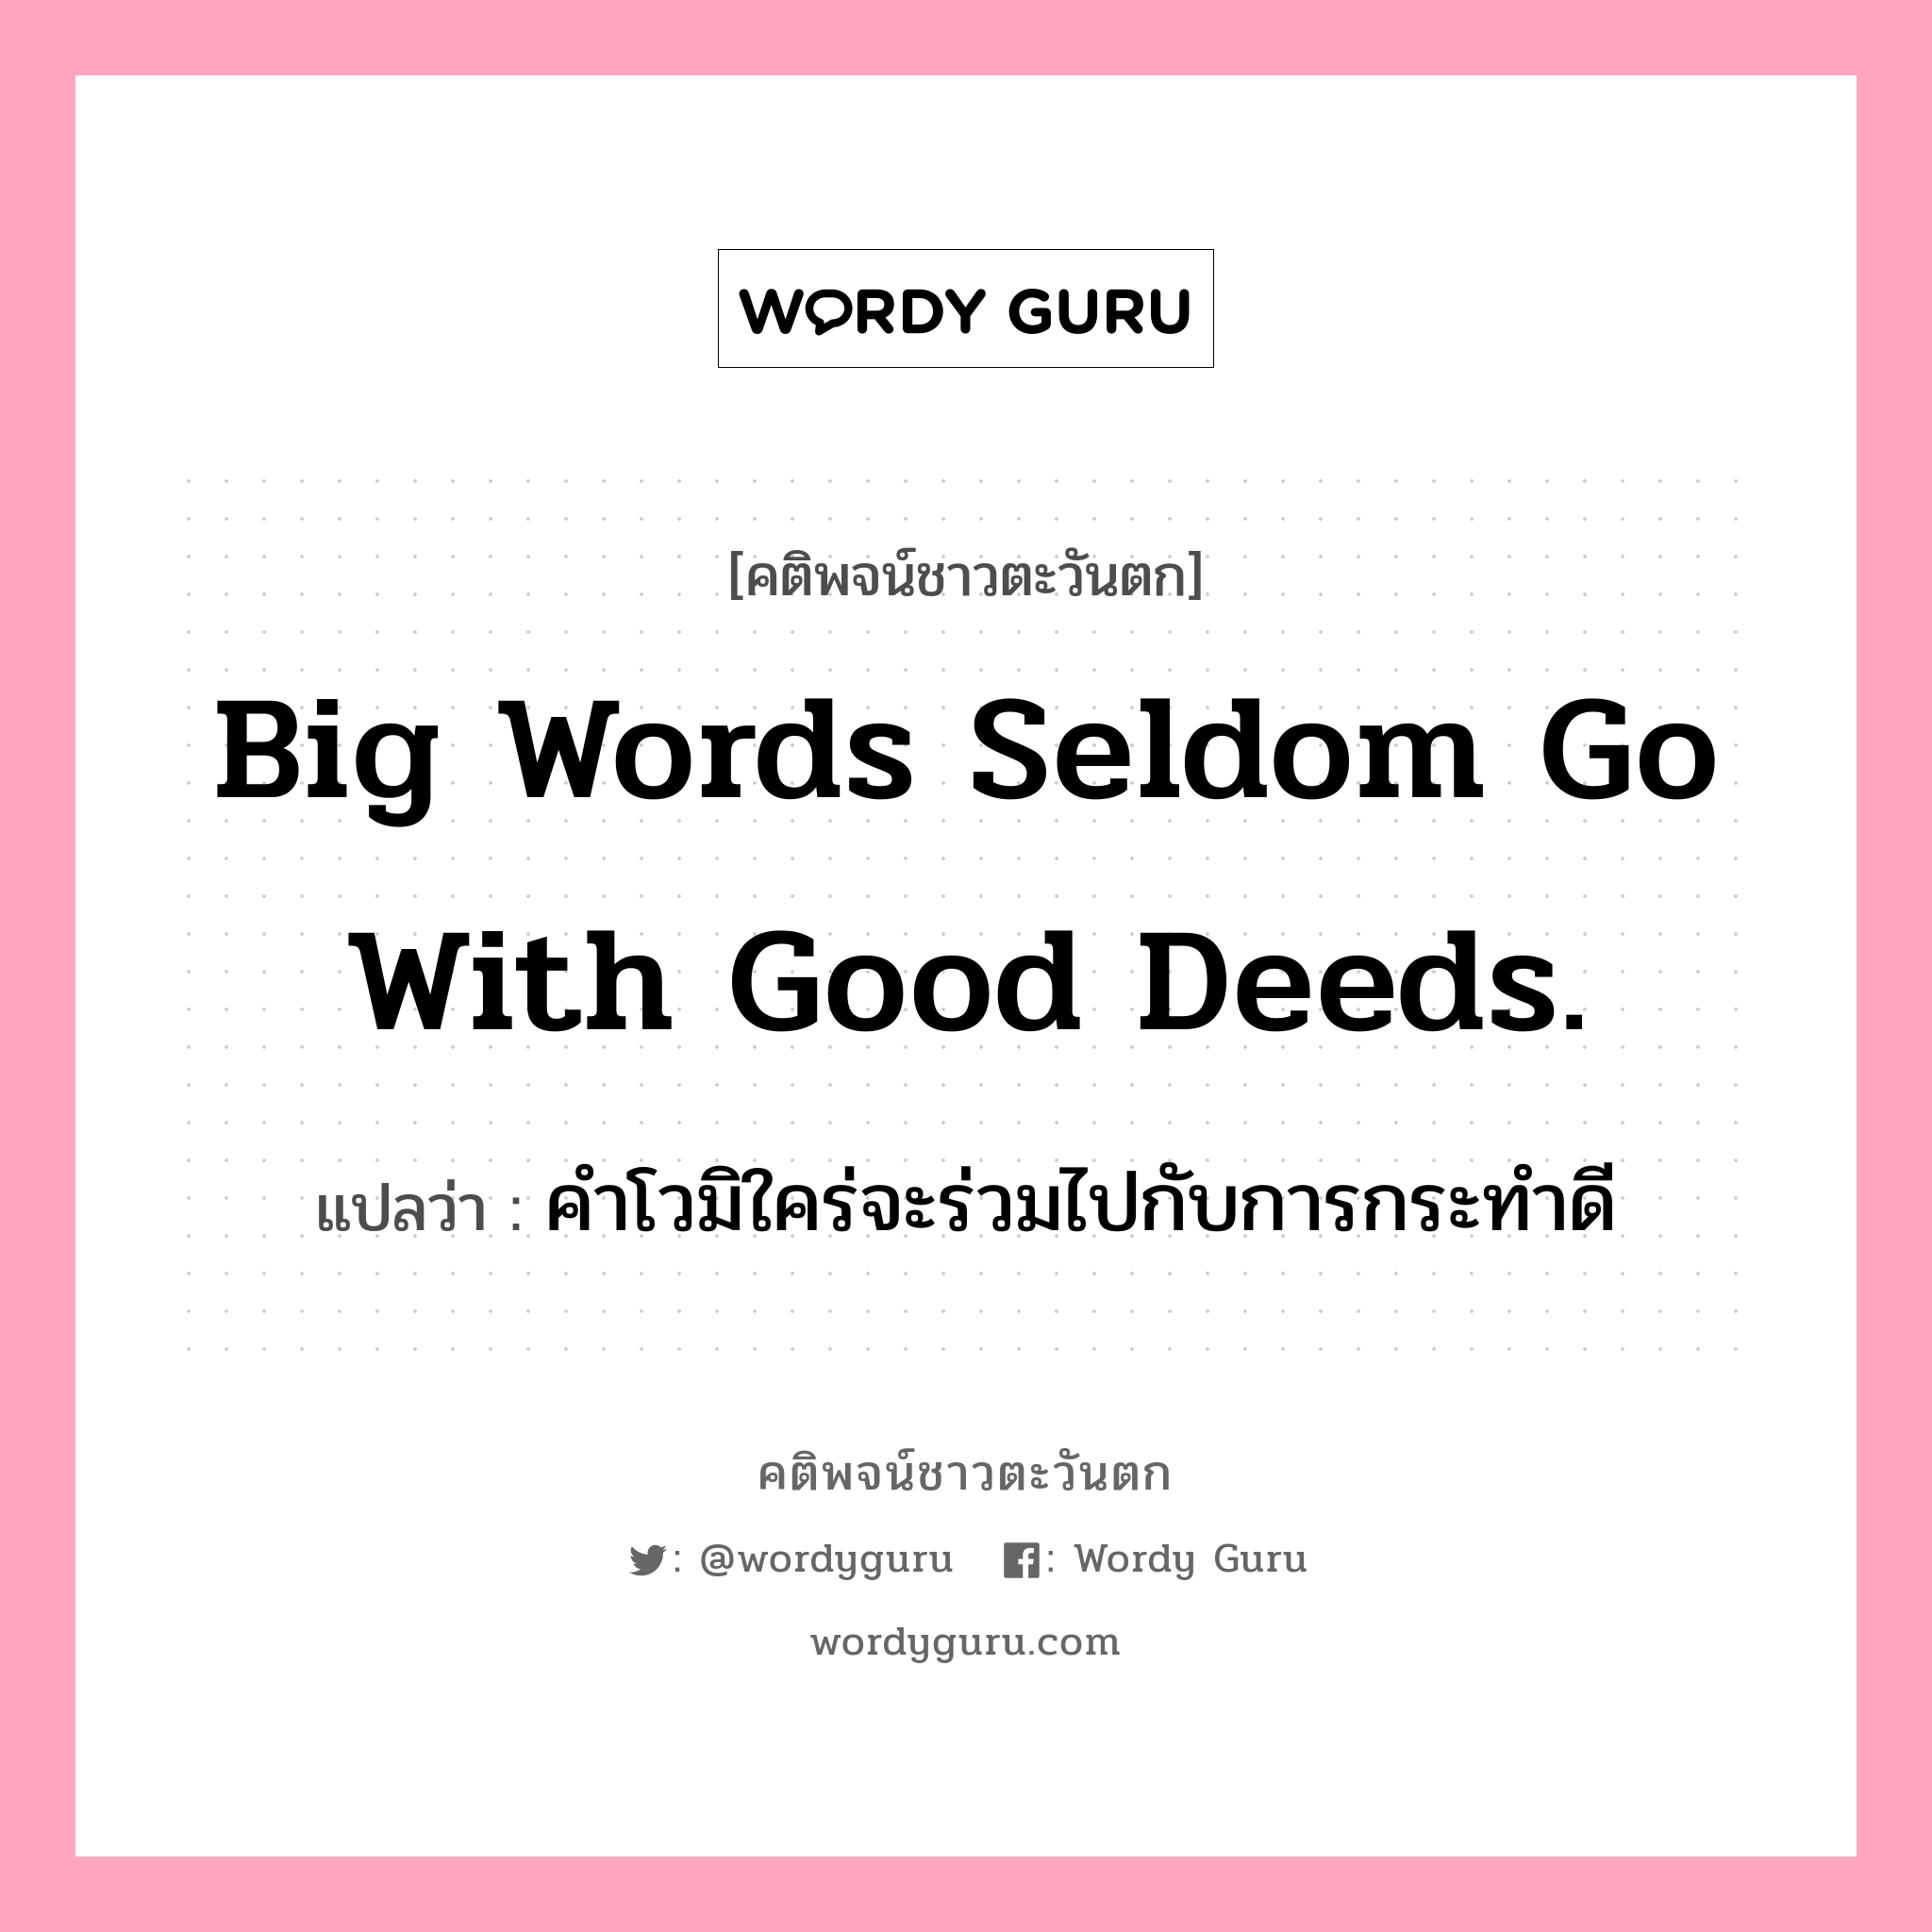 Big words seldom go with good deeds., คติพจน์ชาวตะวันตก Big words seldom go with good deeds. แปลว่า คำโวมิใคร่จะร่วมไปกับการกระทำดี